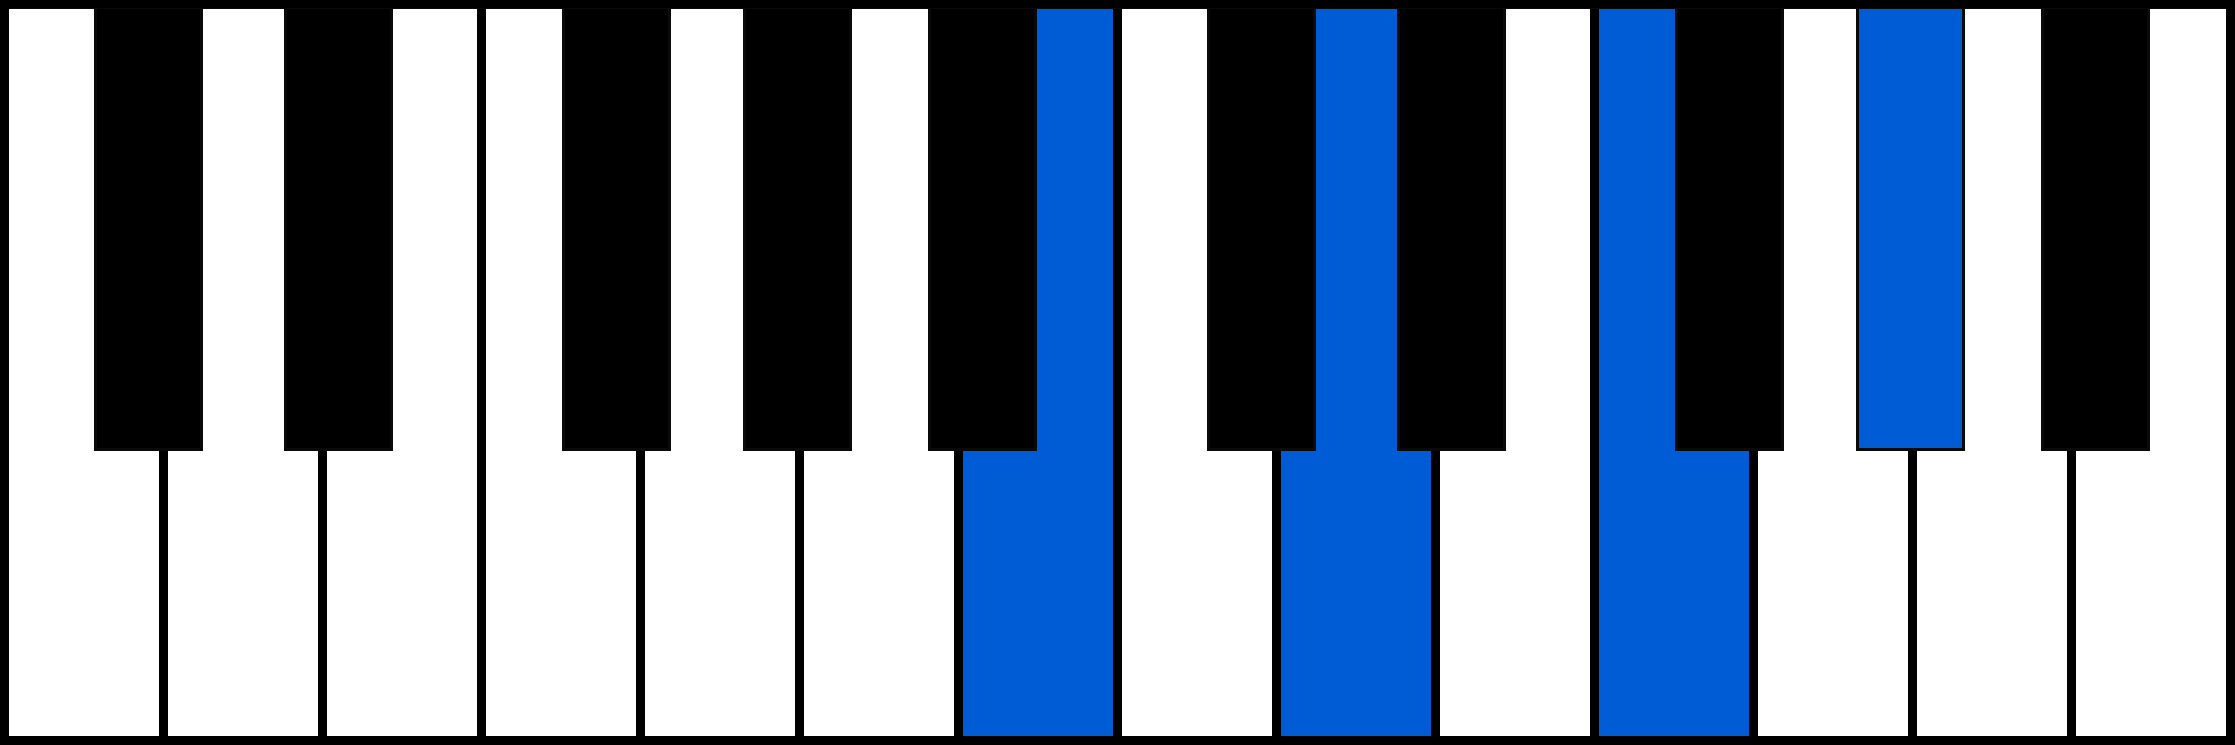 Bdim7 piano chord fingering